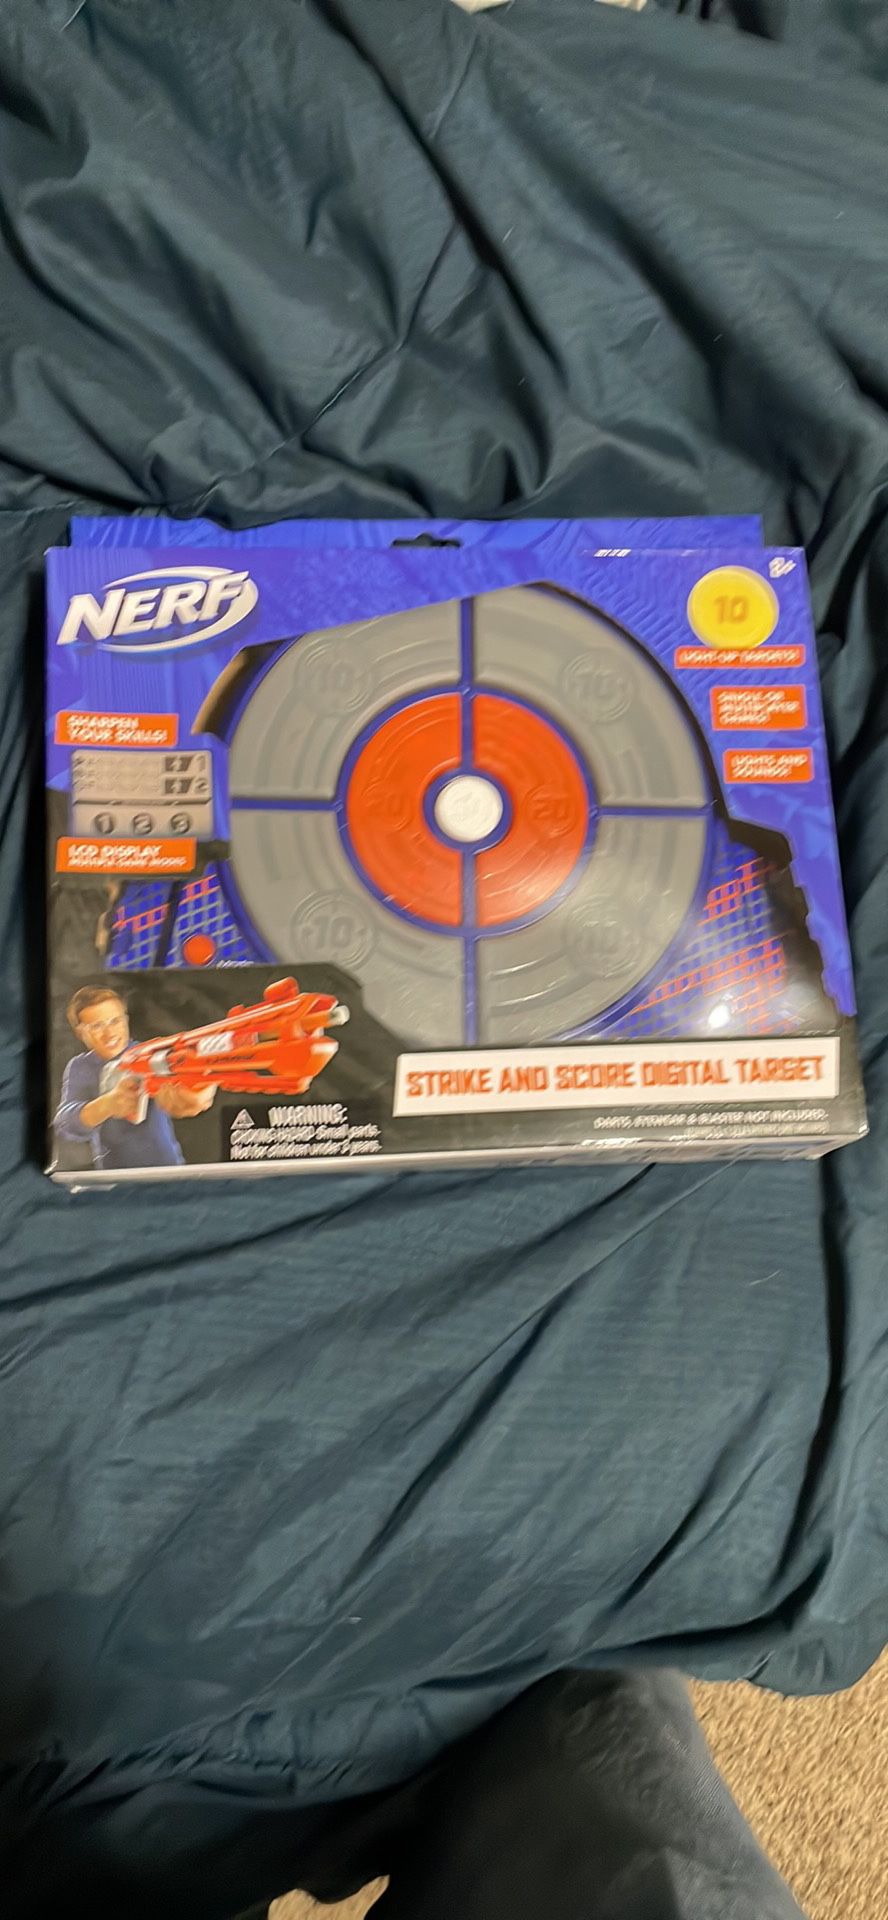 Nerf Strike And Score Digital Target